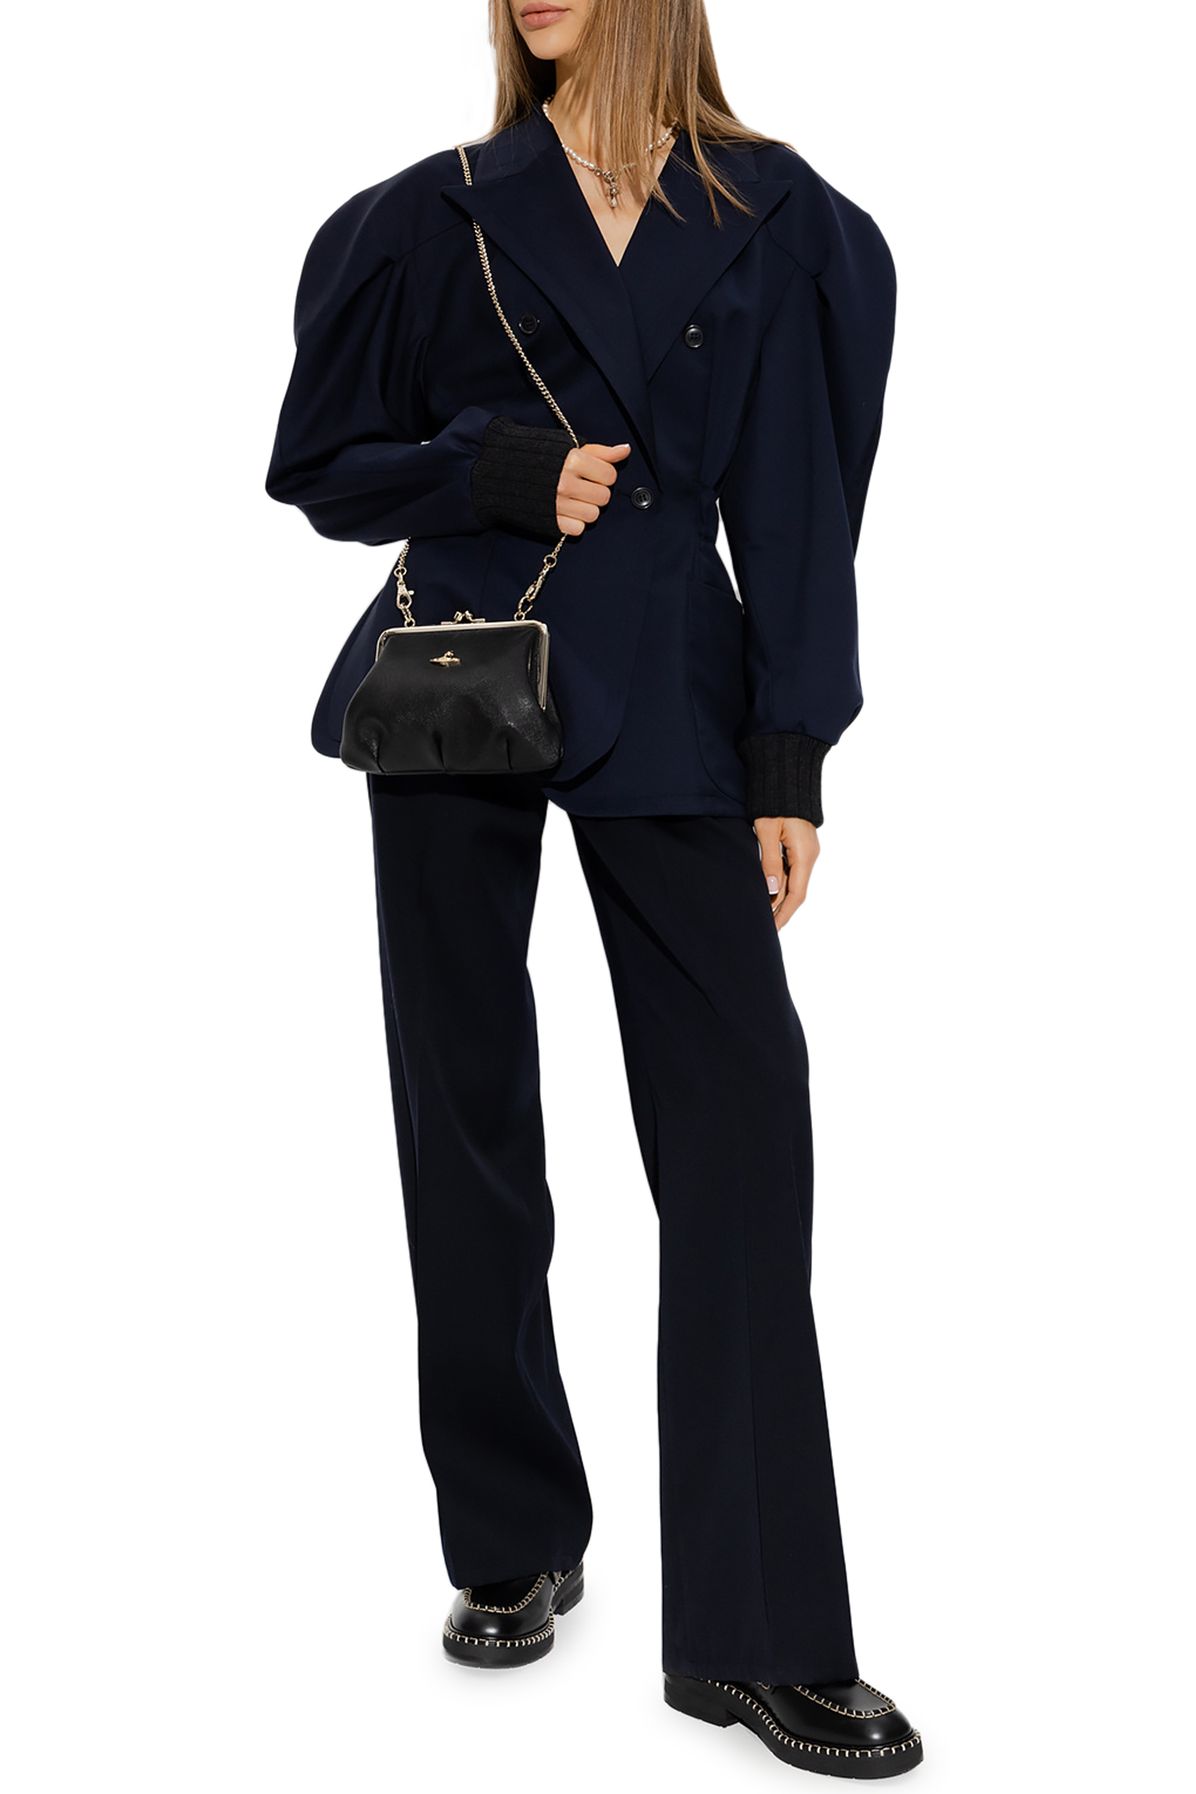 Vivienne Westwood ‘Spontanea' jacket